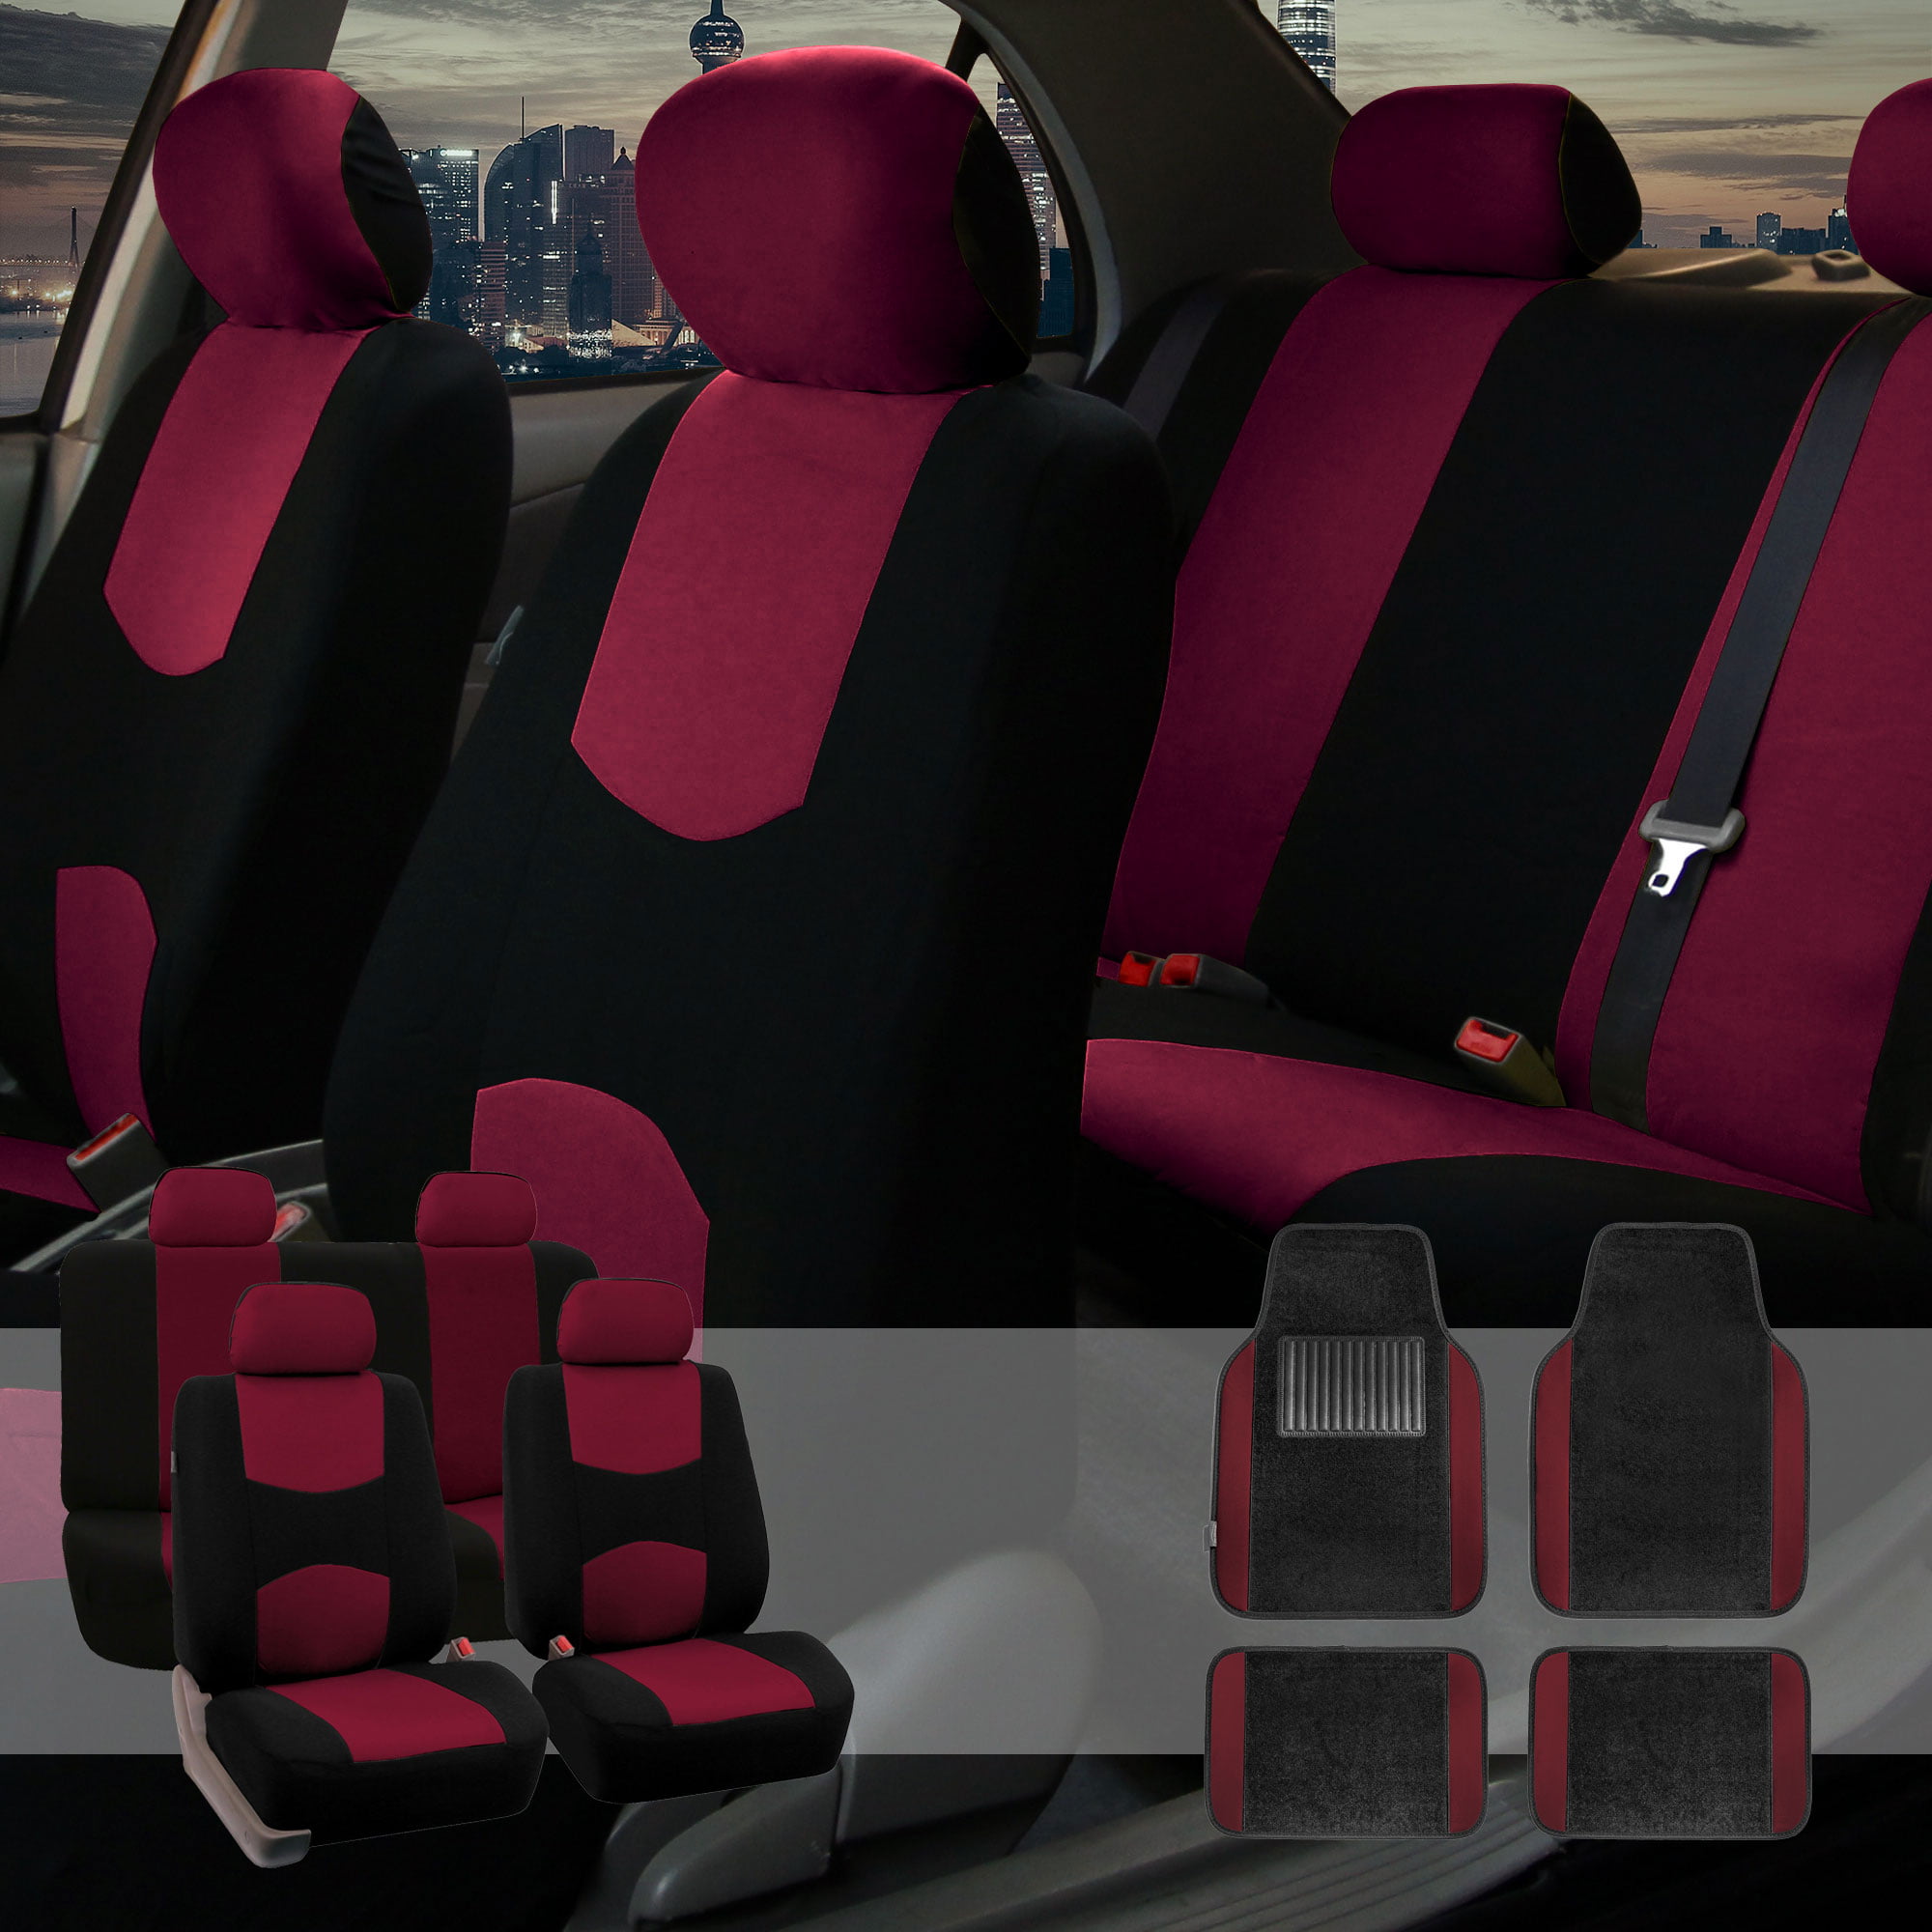 burgundy car seat and stroller